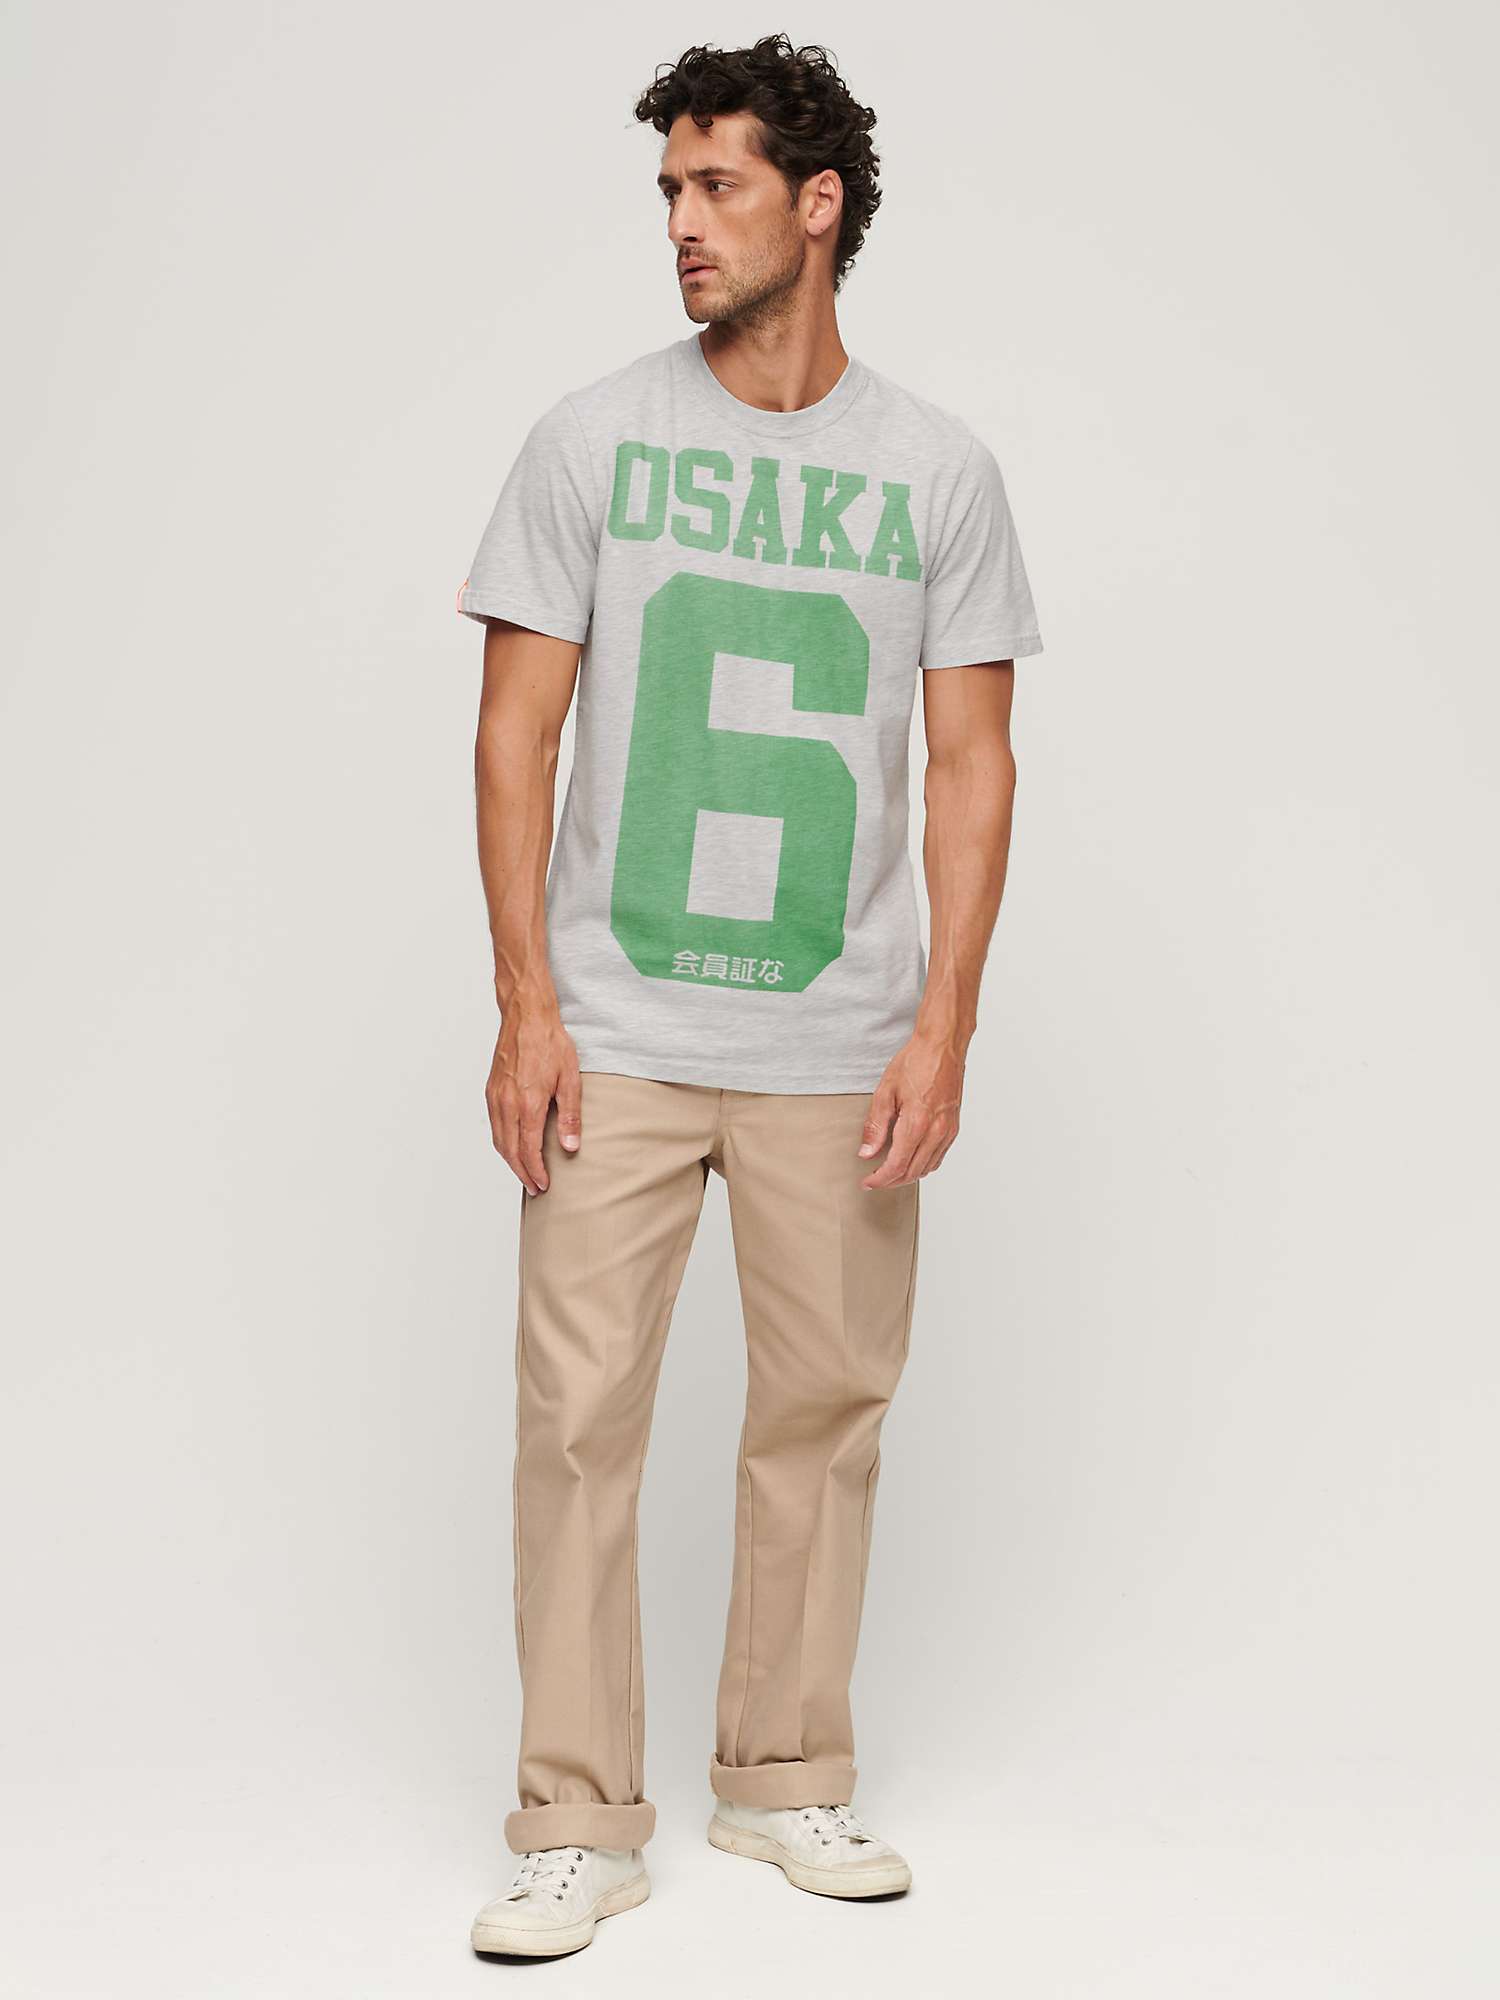 Buy Superdry Osaka 6 Mono Standard T-Shirt Online at johnlewis.com